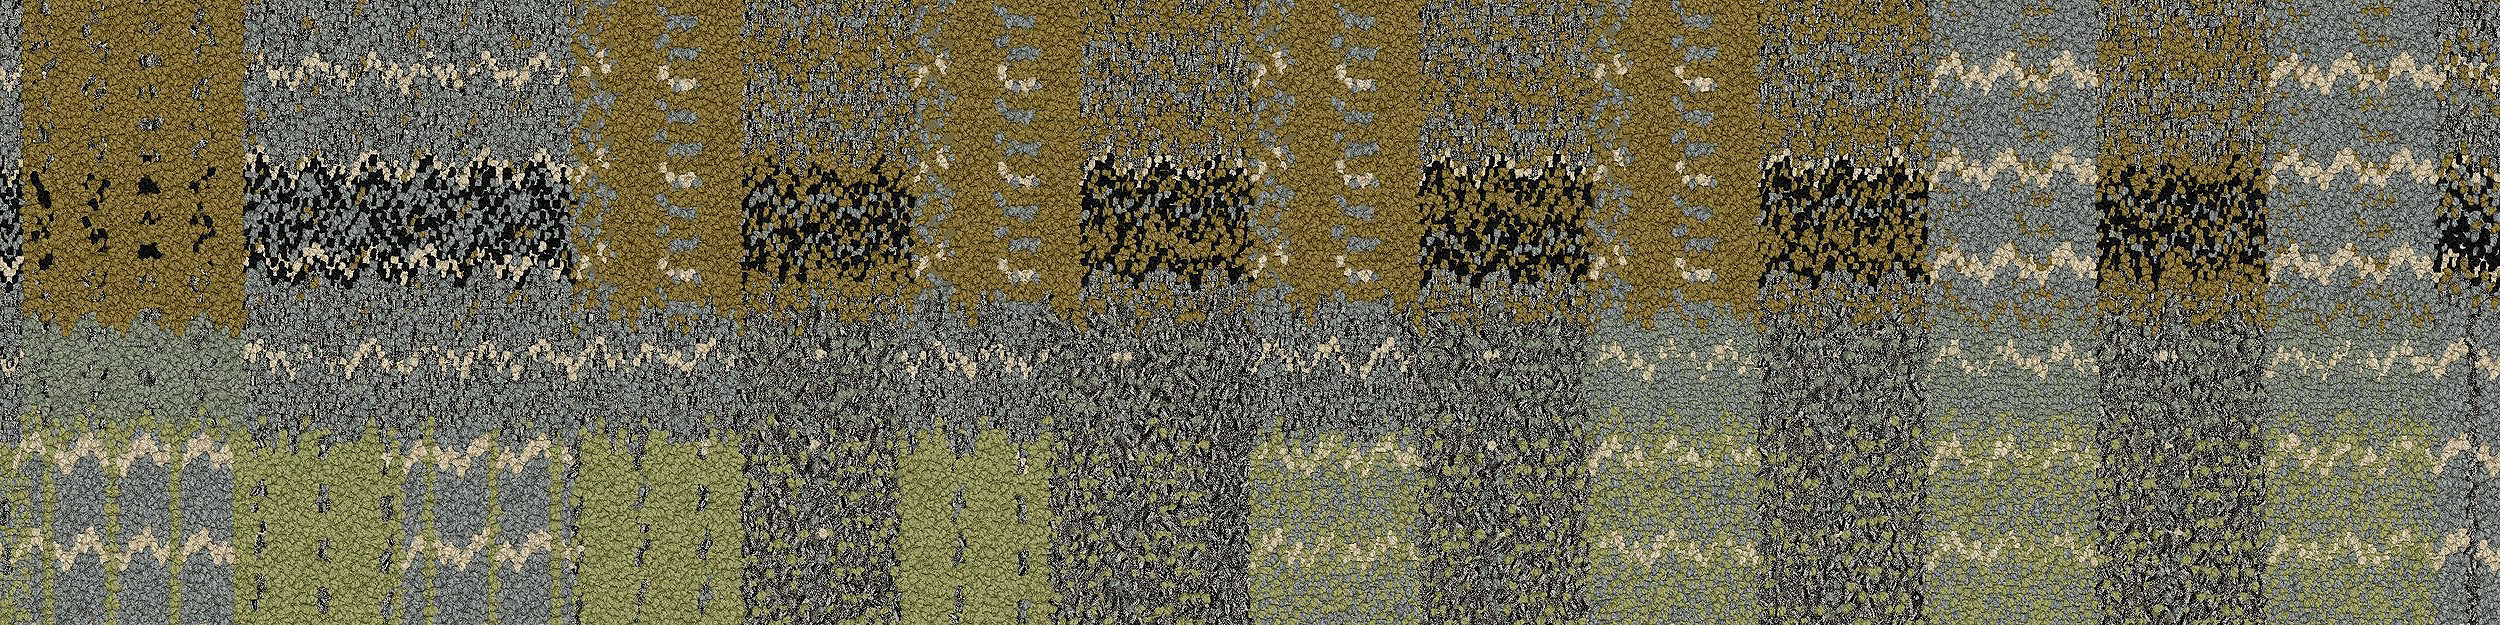 Social Fabric Carpet Tile In Meadow imagen número 6